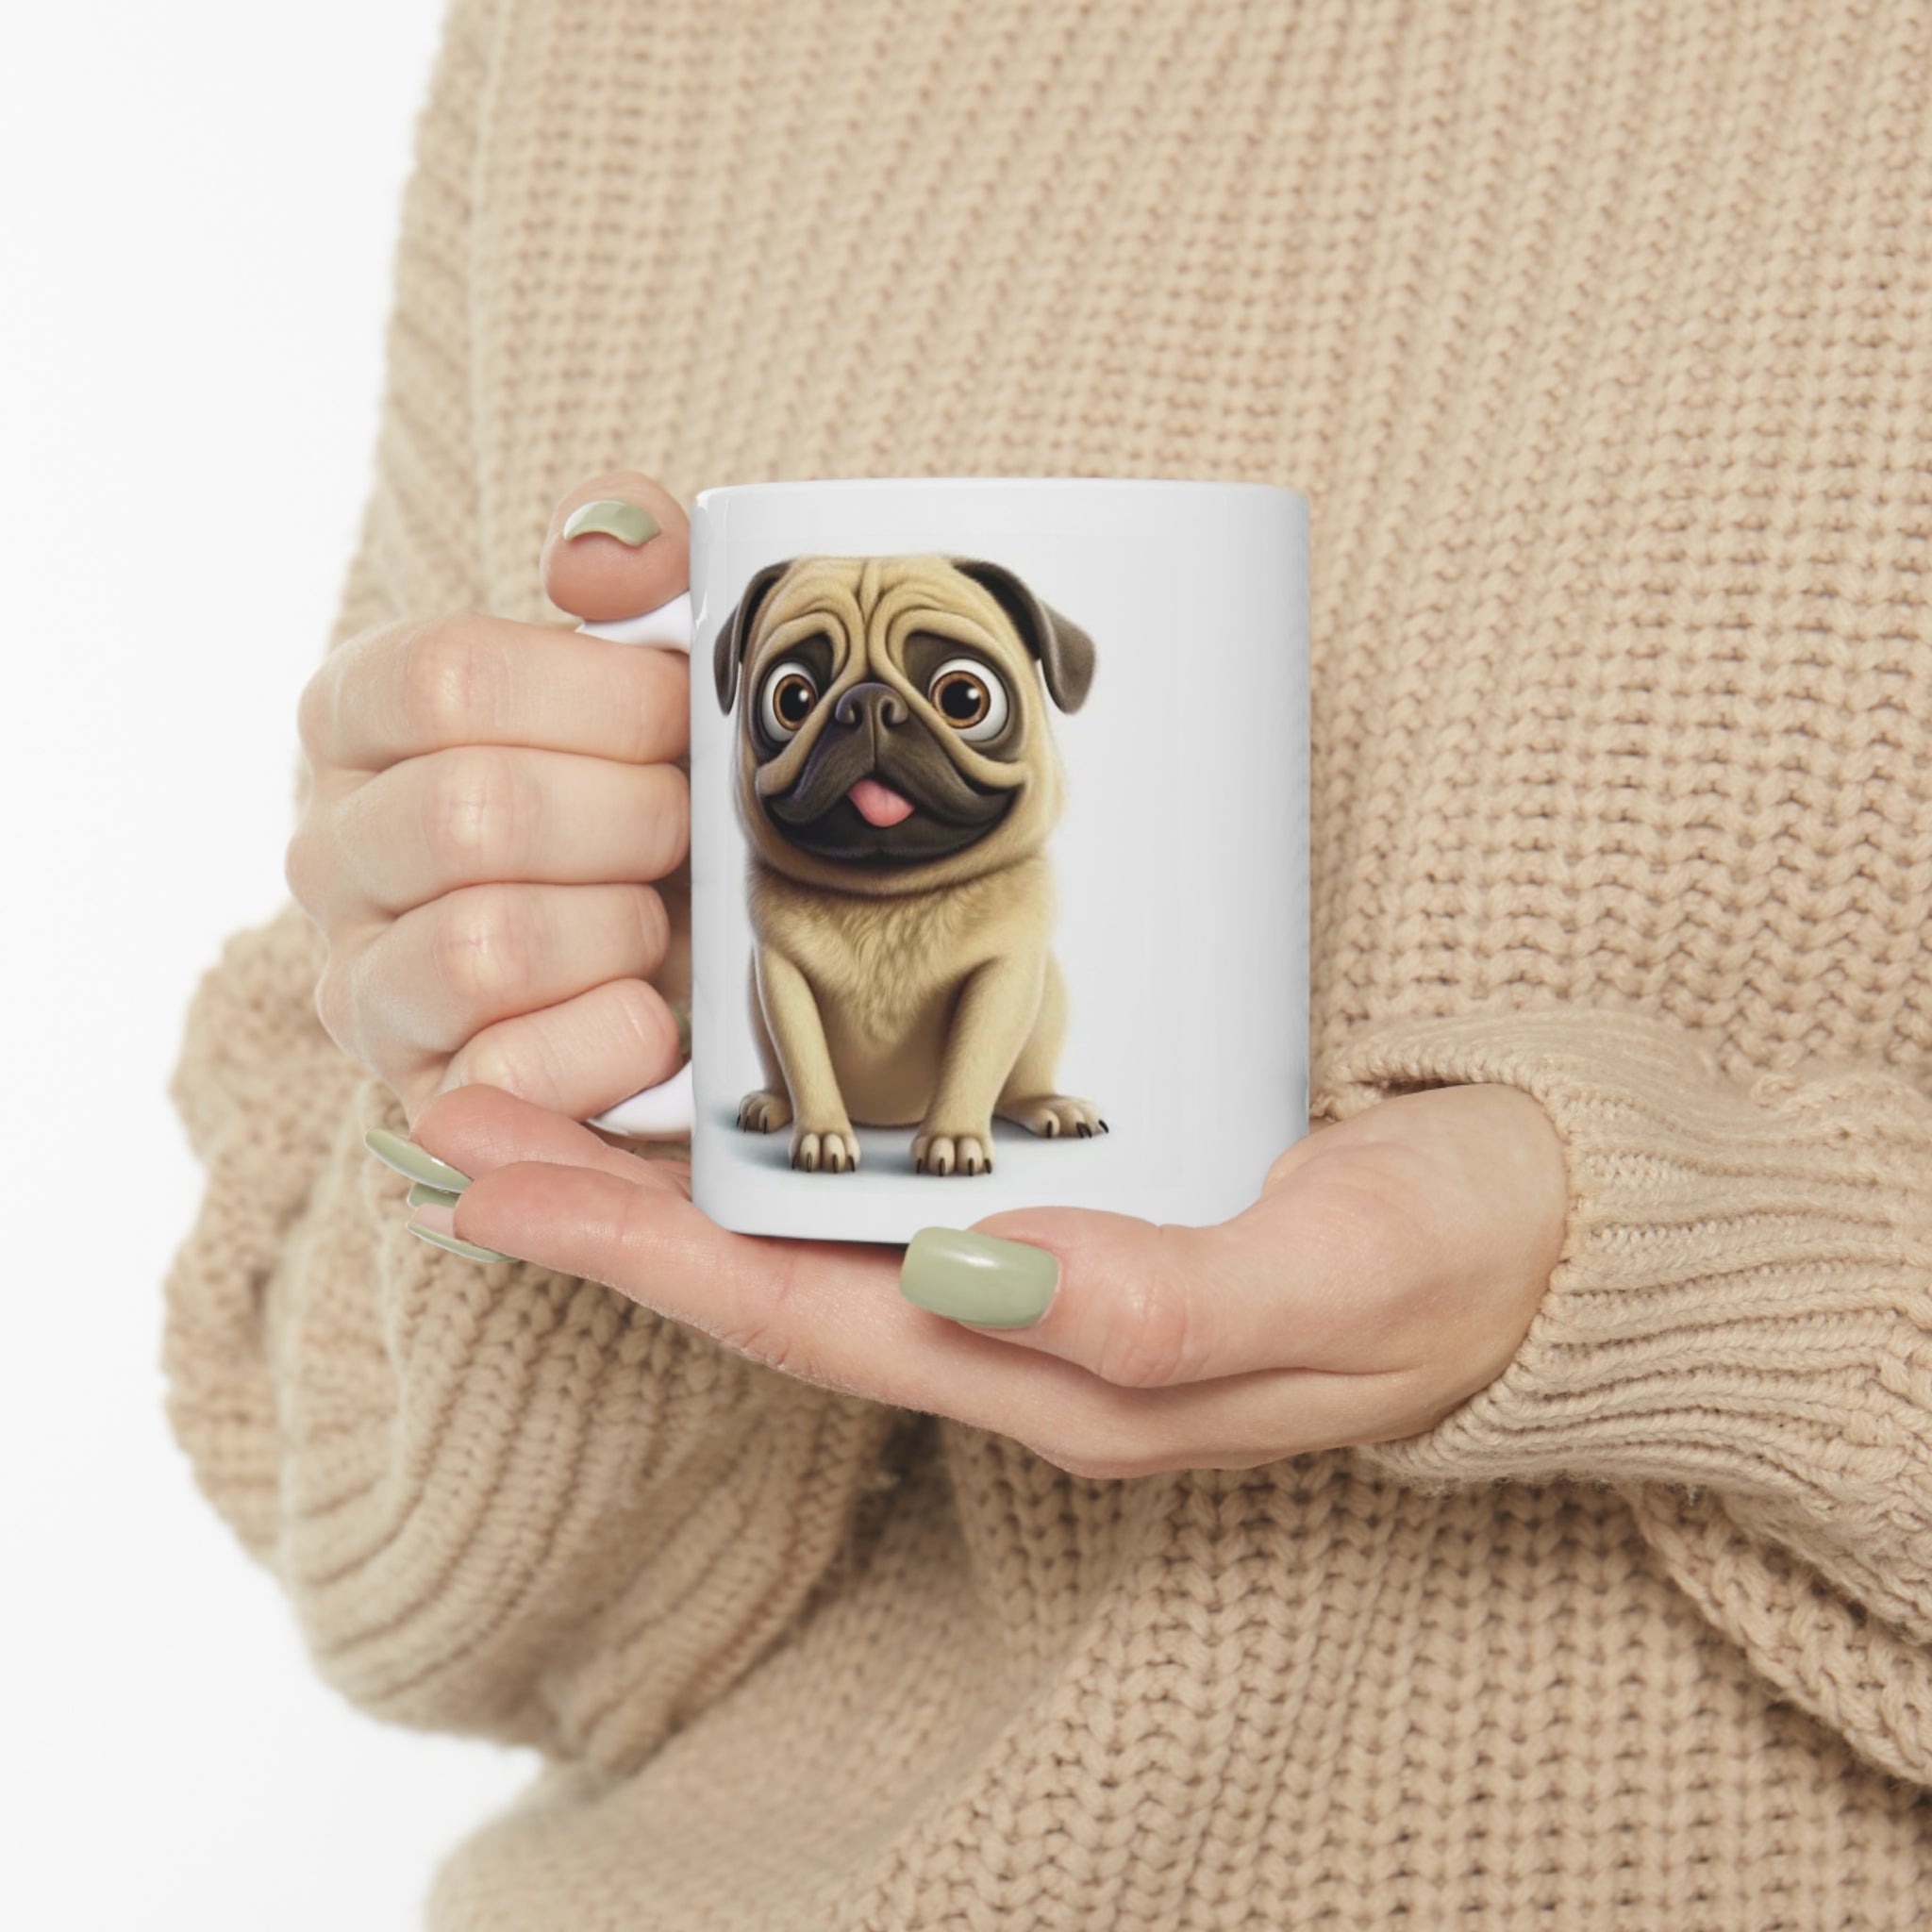 Ceramic Mug 11oz Little Pug